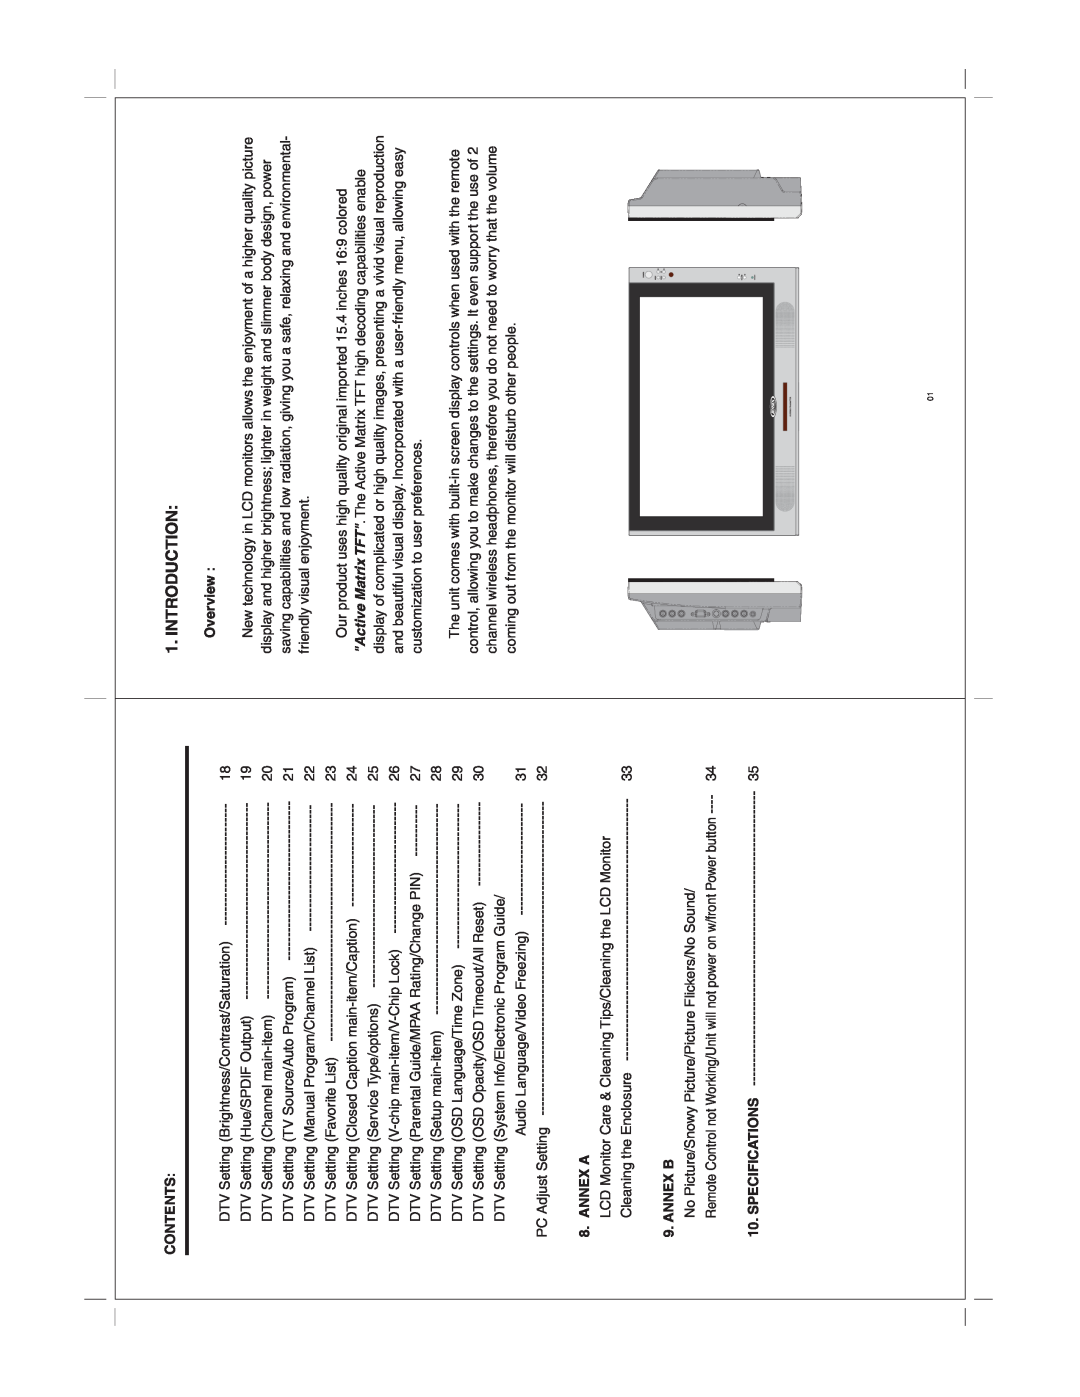 Jensen JE1510 specifications Introduction, Contents, Annex A, Annex B, Overview 